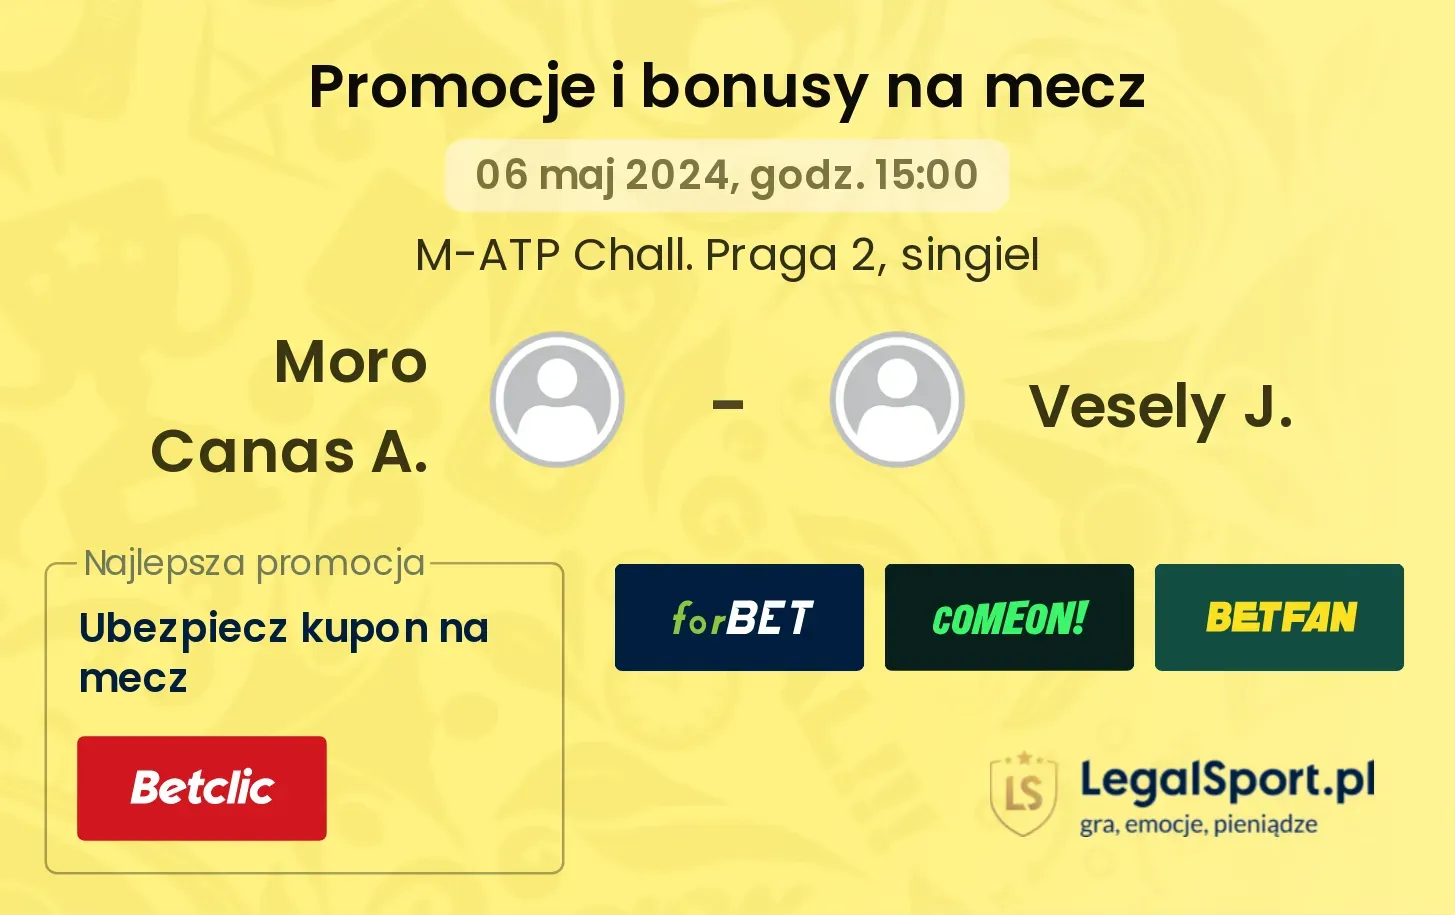 Moro Canas A. - Vesely J. promocje bonusy na mecz